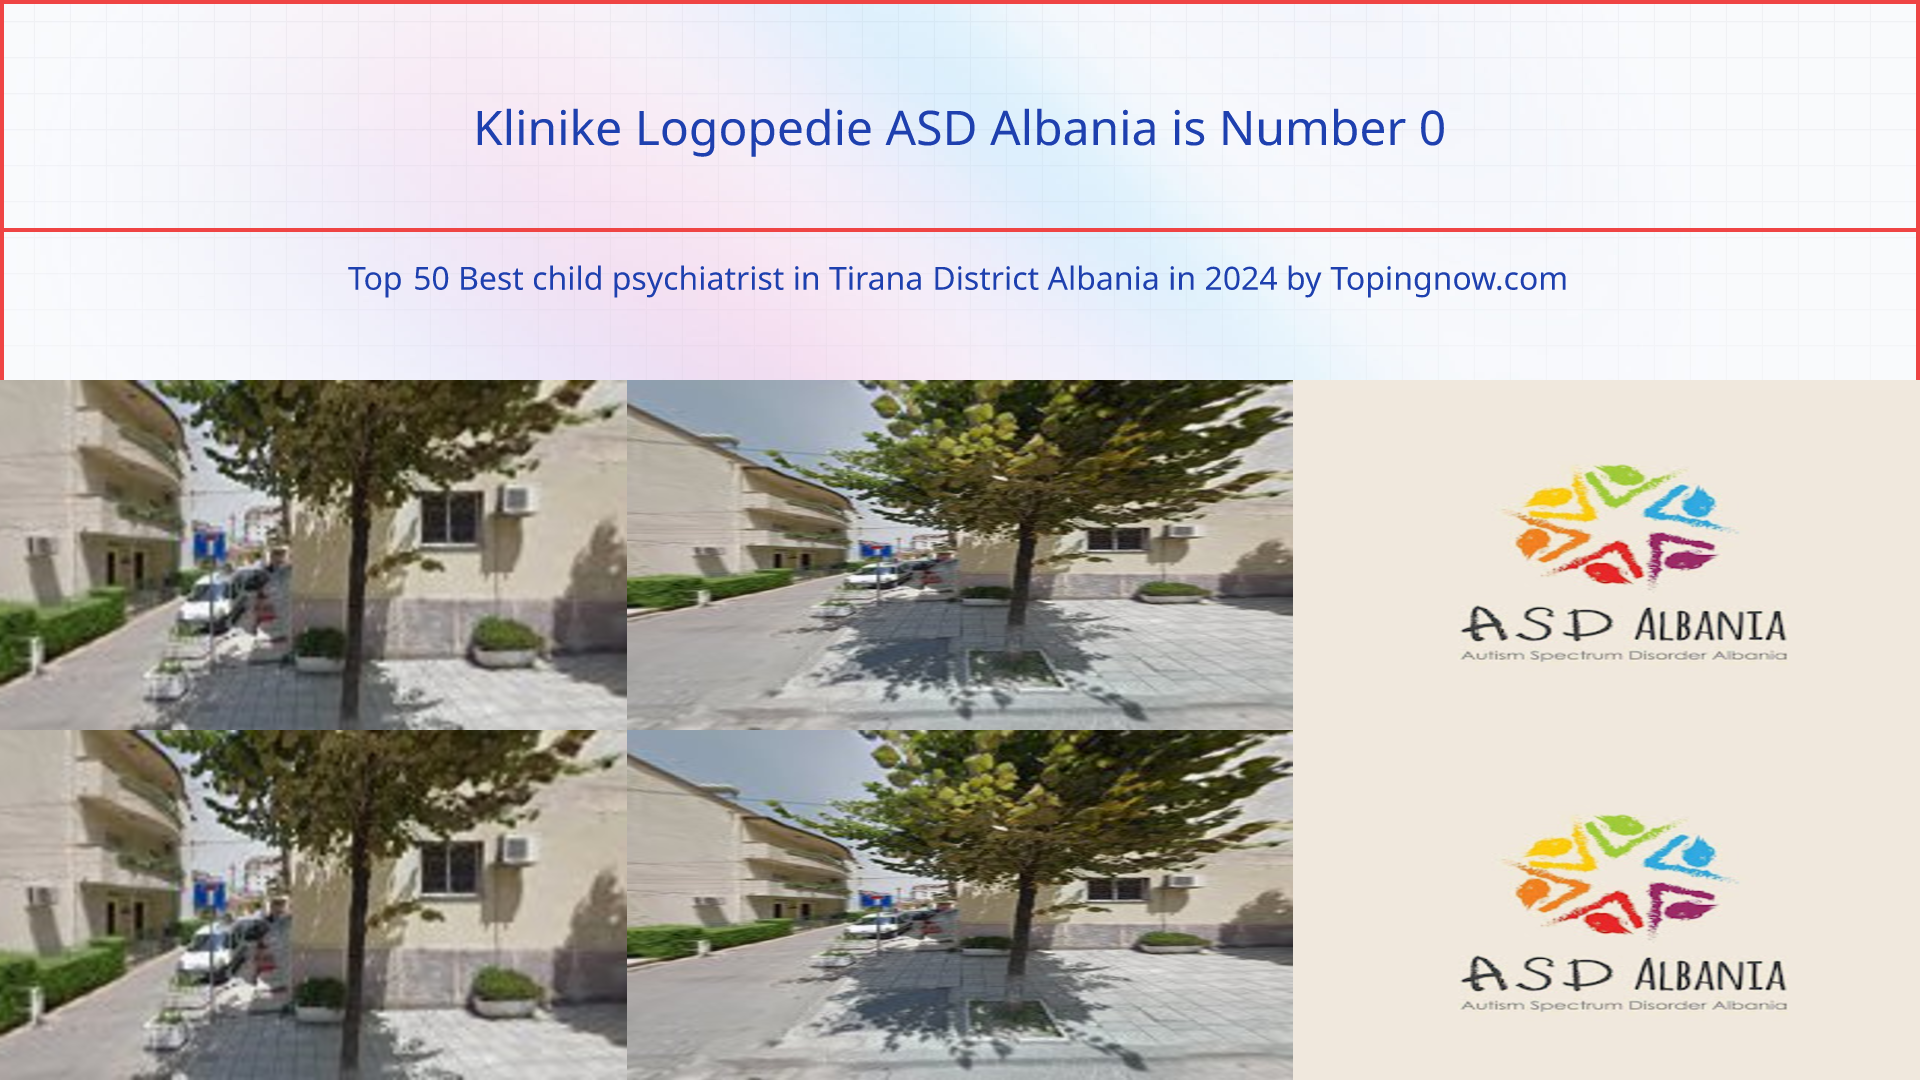 Klinike Logopedie ASD Albania: Top 50 Best child psychiatrist in Tirana District Albania in 2024